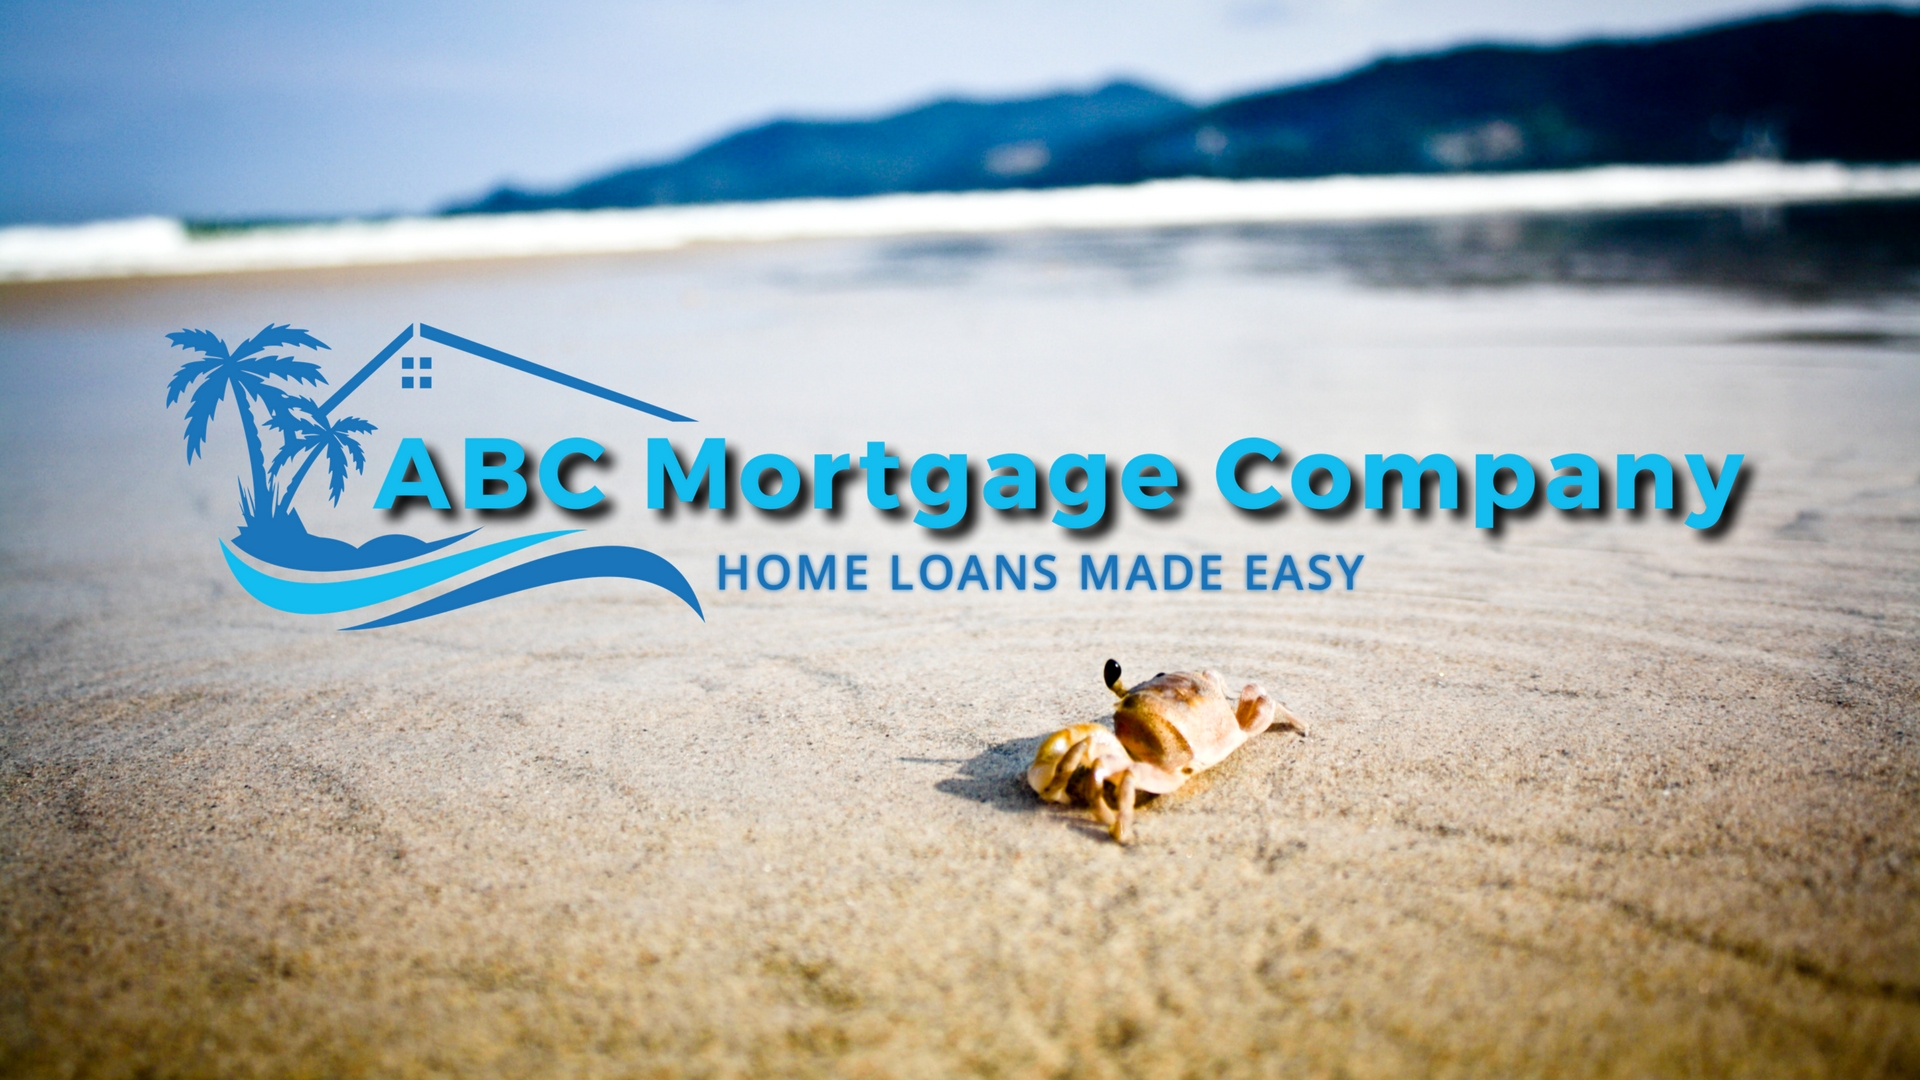 ABC Mortgage Company